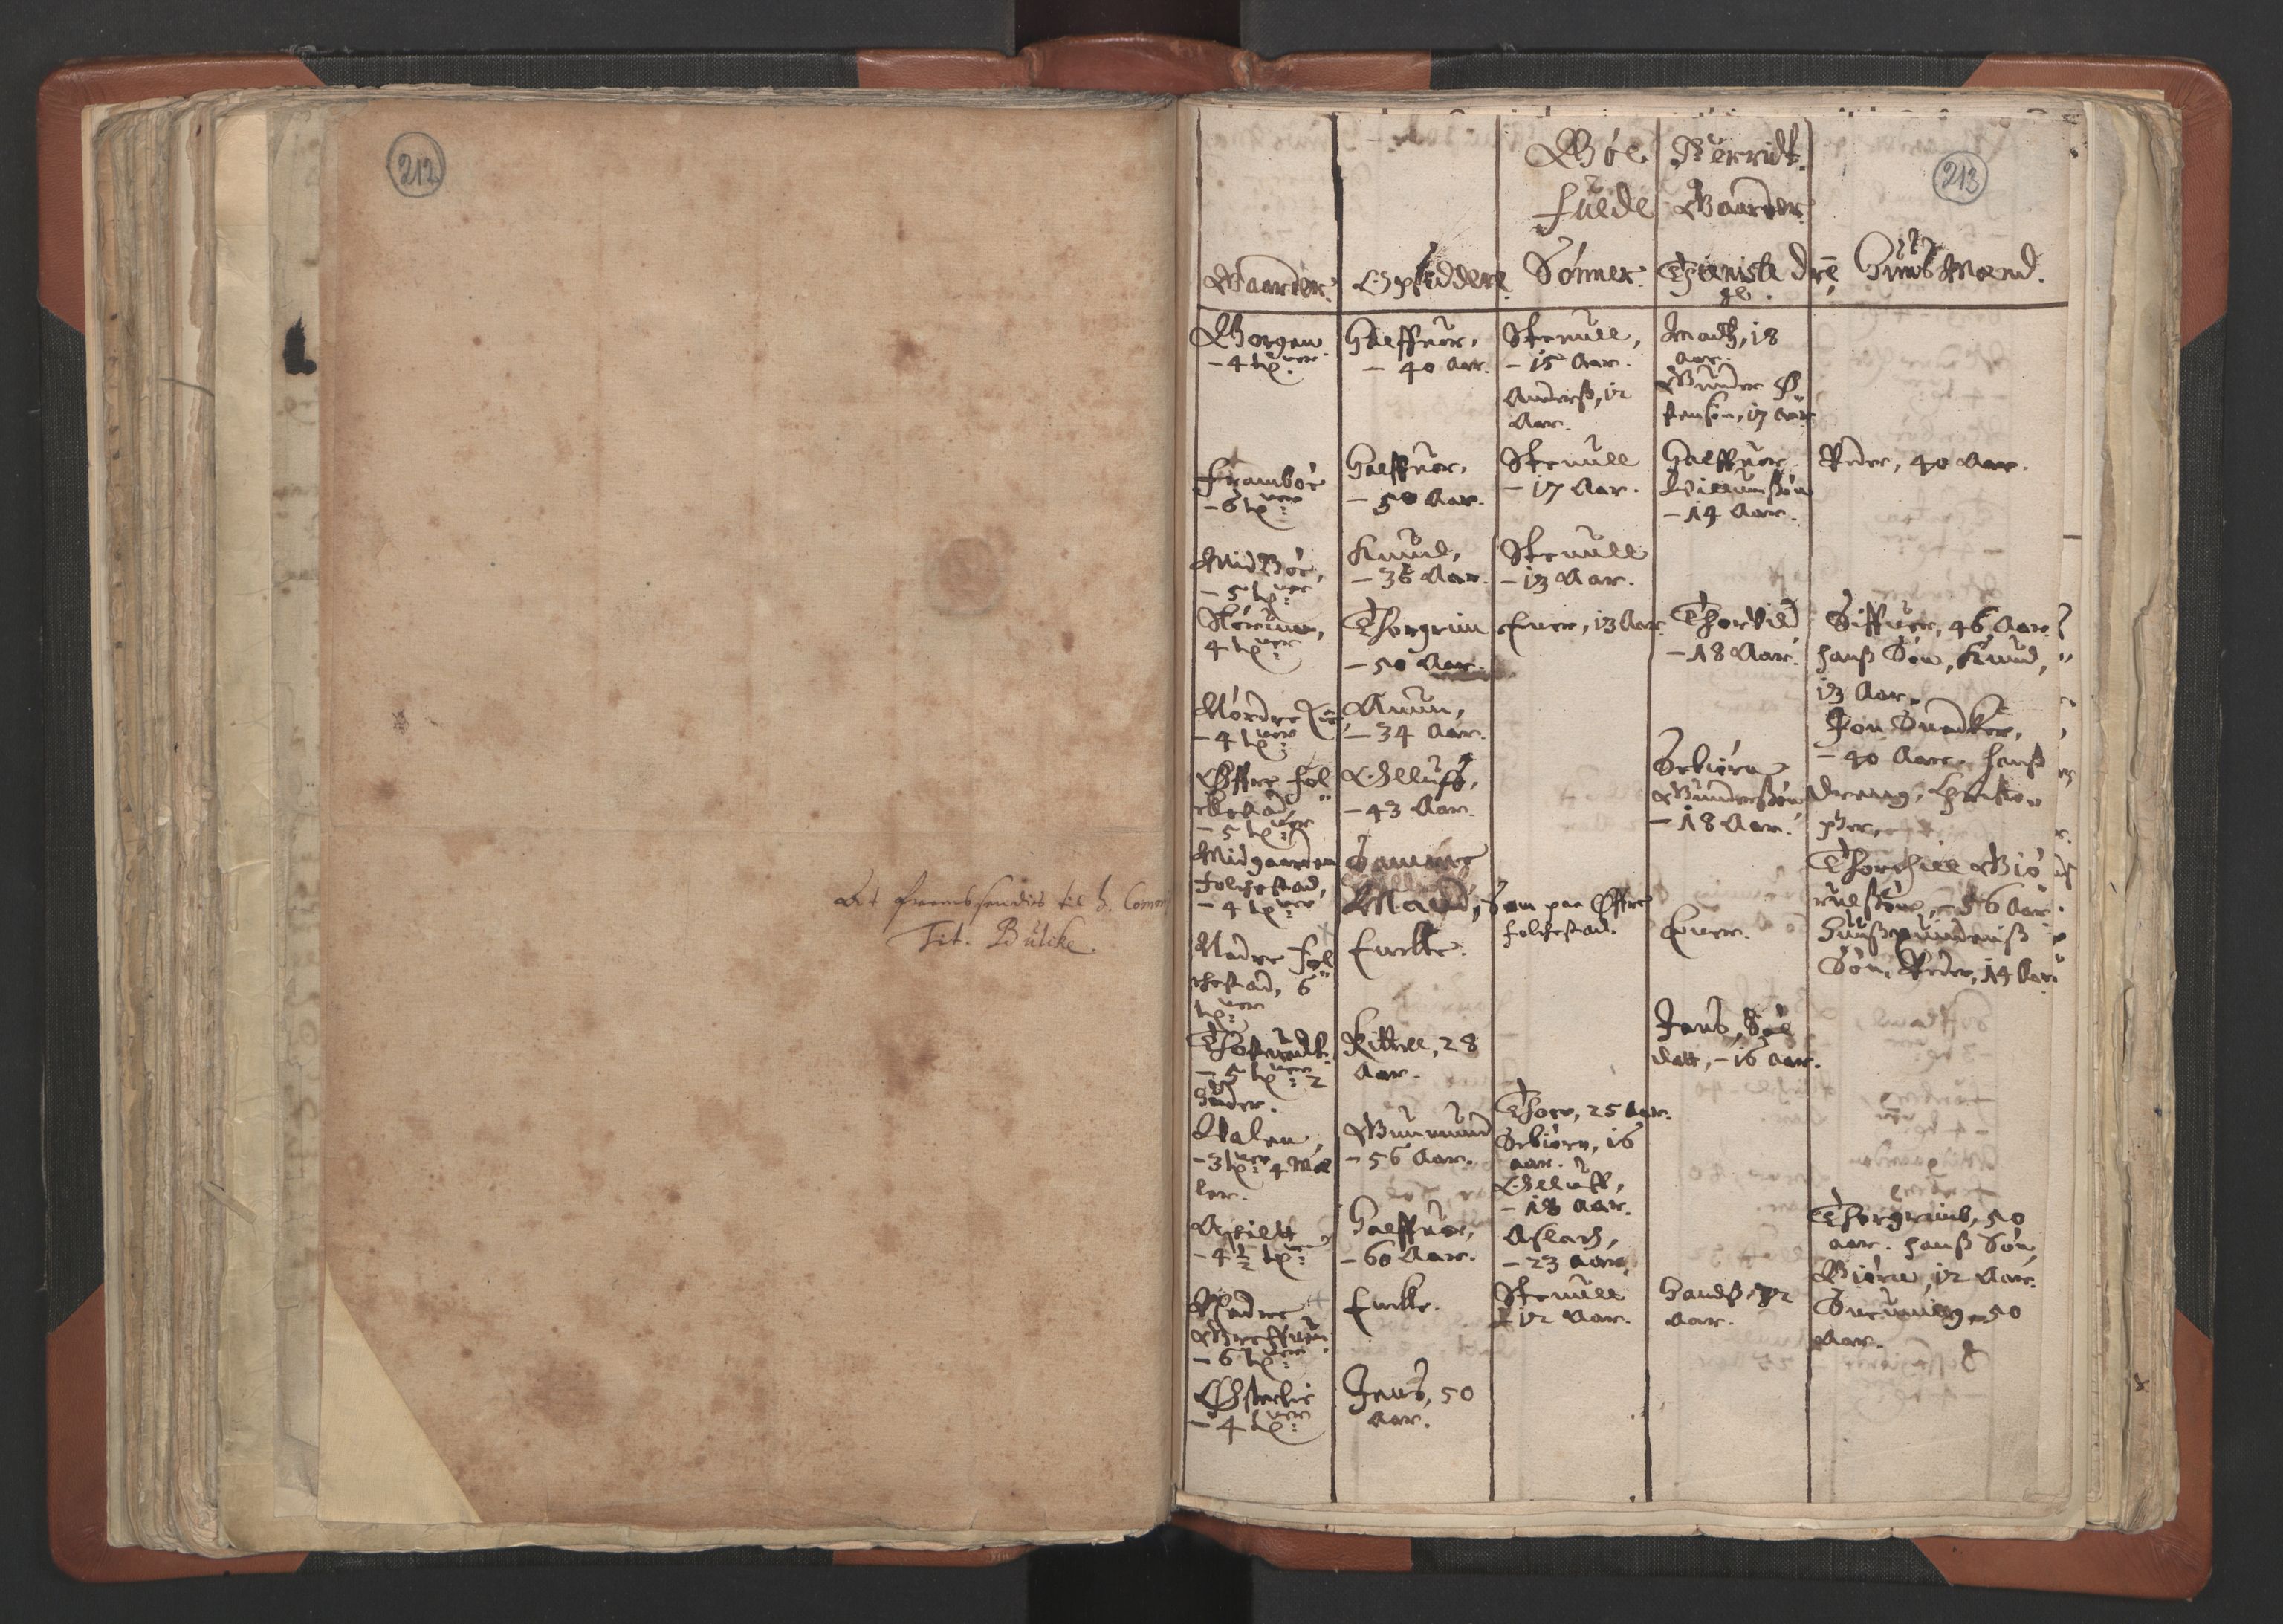 RA, Vicar's Census 1664-1666, no. 12: Øvre Telemark deanery, Nedre Telemark deanery and Bamble deanery, 1664-1666, p. 212-213